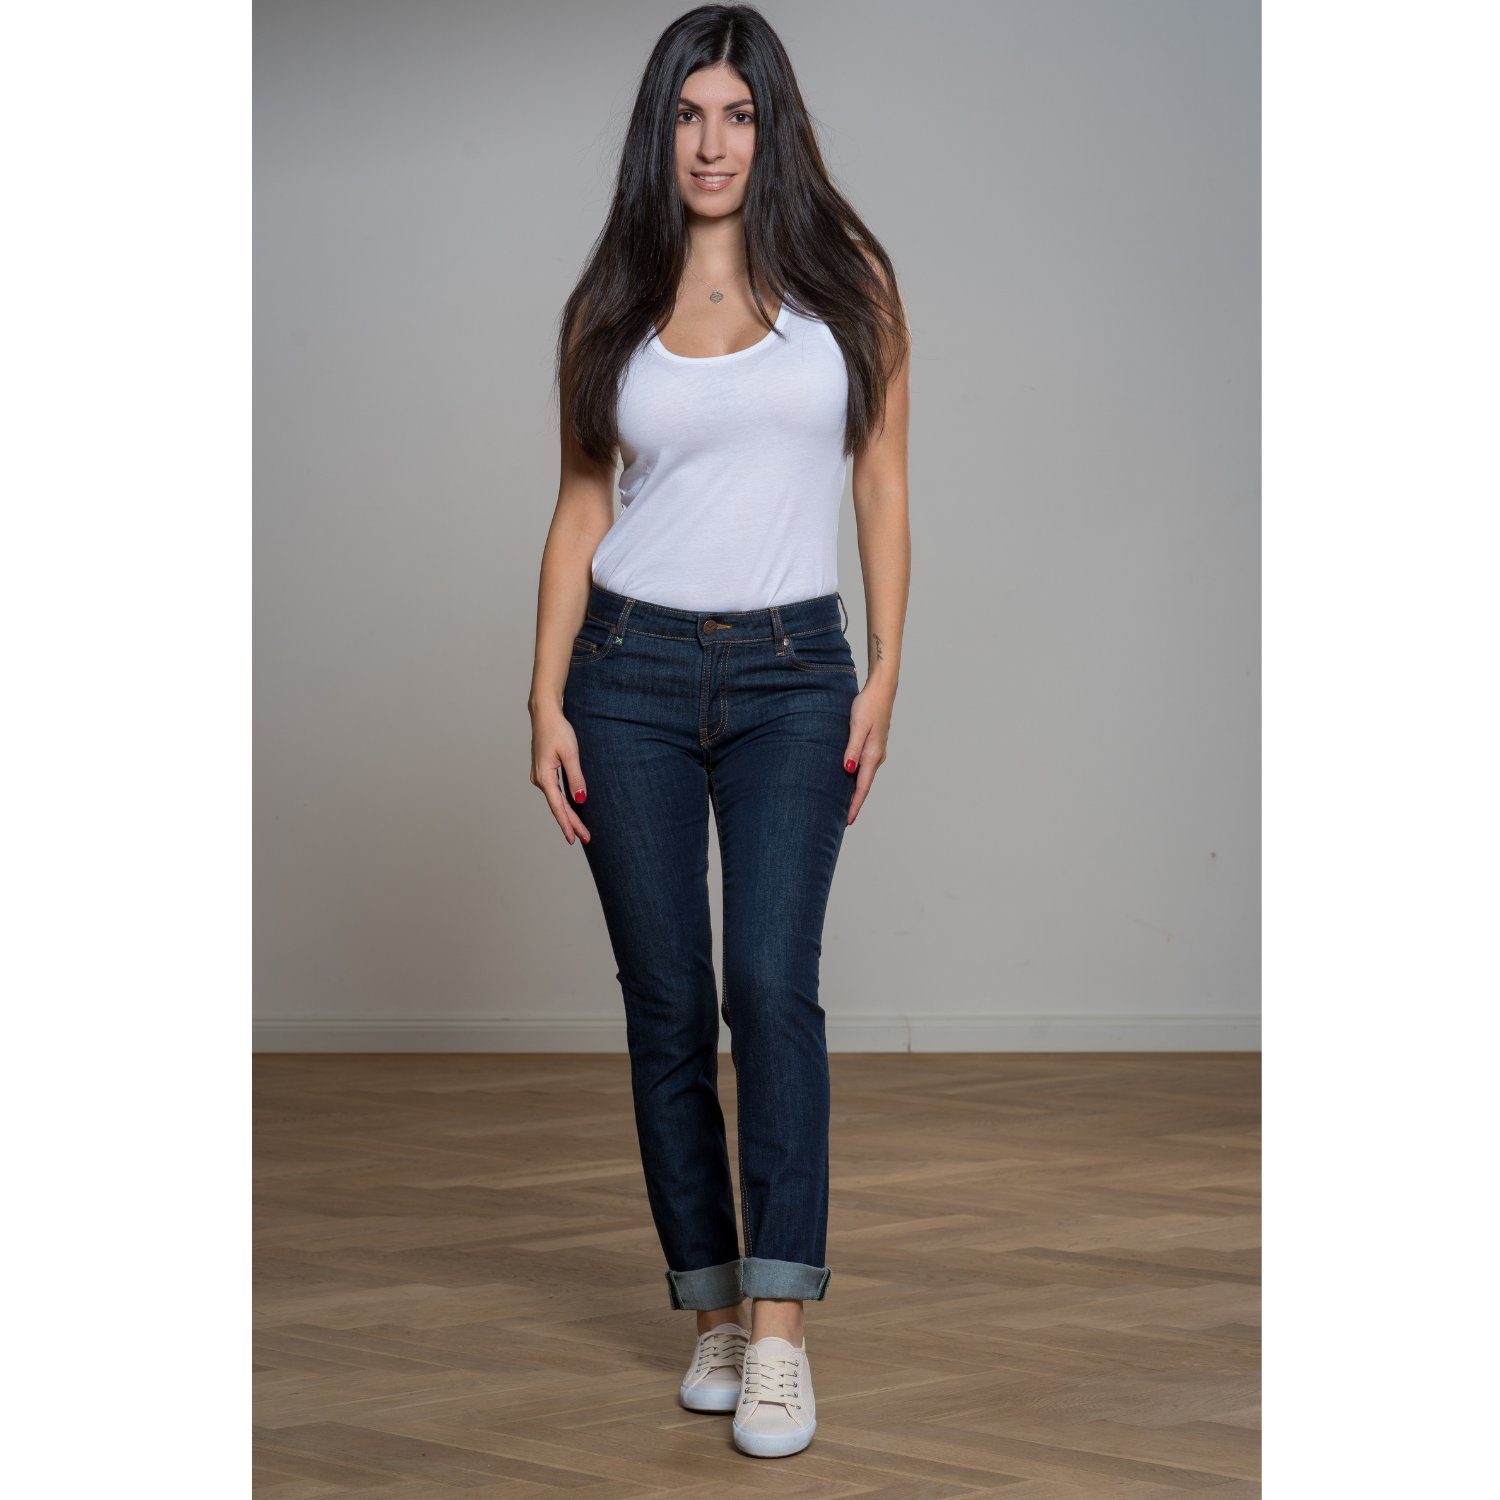 Günstig und beliebt Feuervogl 5-Pocket-Jeans fv-Sve:nja, Slim Fit, Fit Waist, Blue Classic Damenjeans Medium Waist, 5-Pocket-Style, Medium Slim